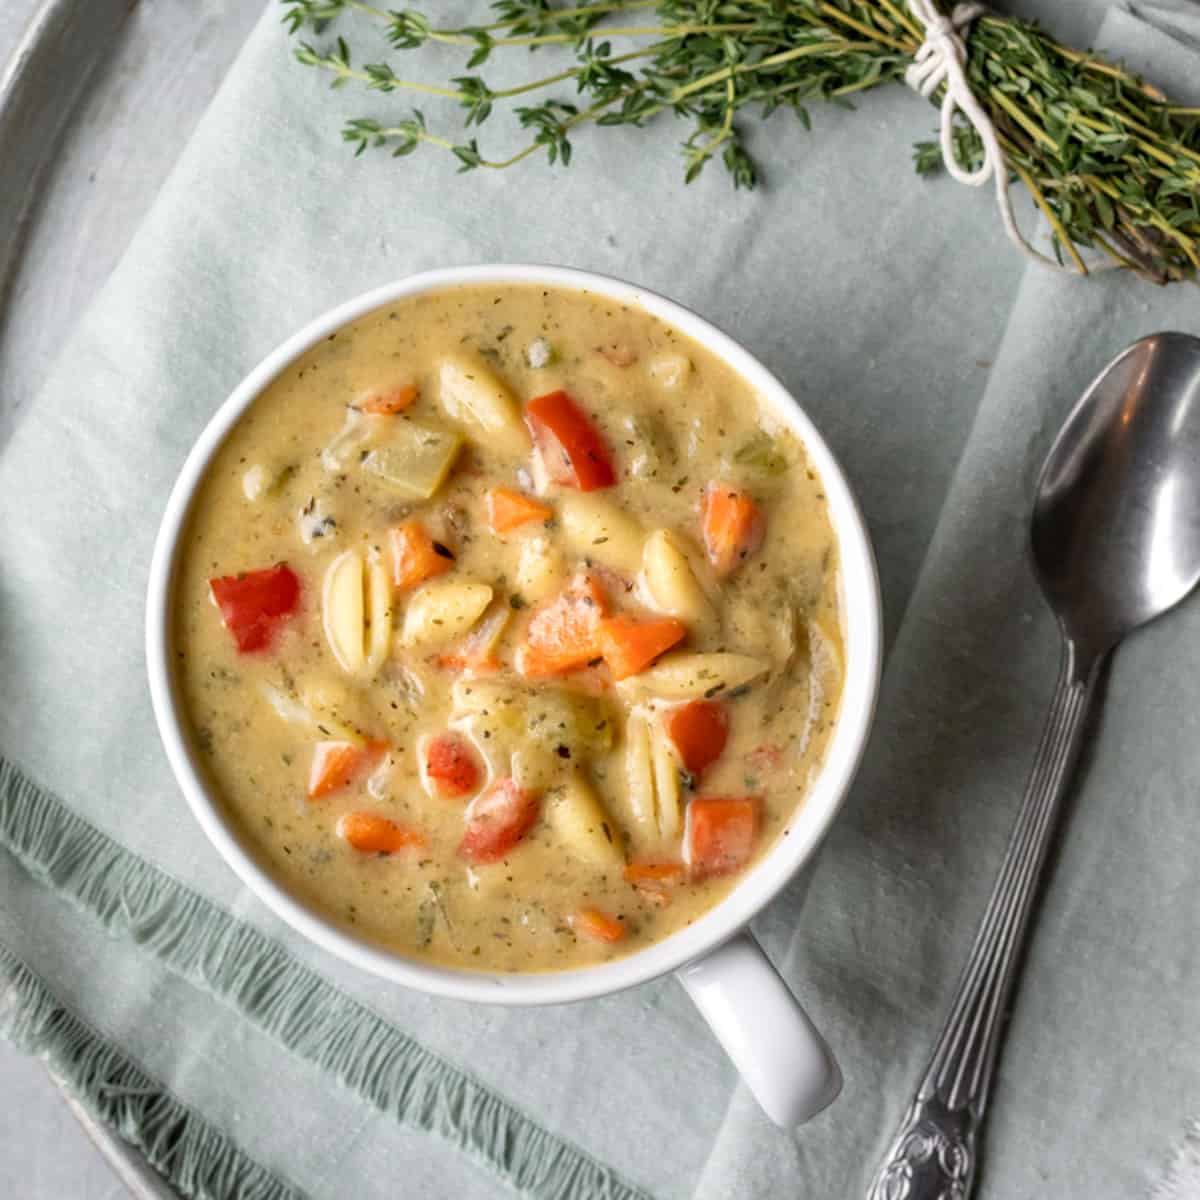 https://myquietkitchen.com/wp-content/uploads/2019/12/creamy-vegetable-soup.jpg